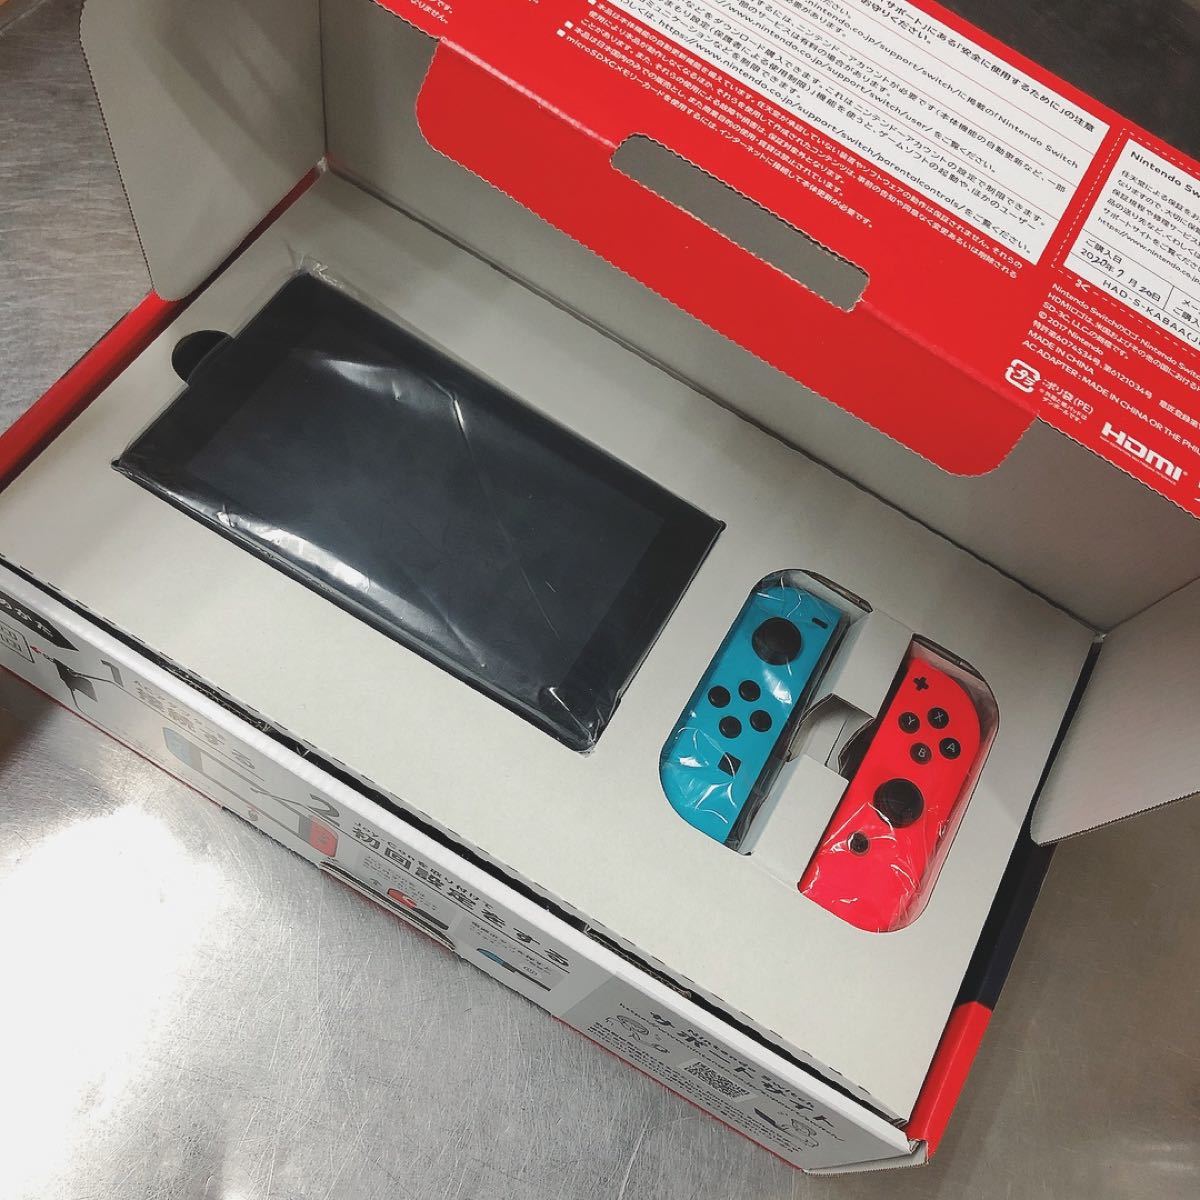 Nintendo Switch 新型 本体 Joy-Con (L) ネオンブルー / (R) ネオンレッド任天堂